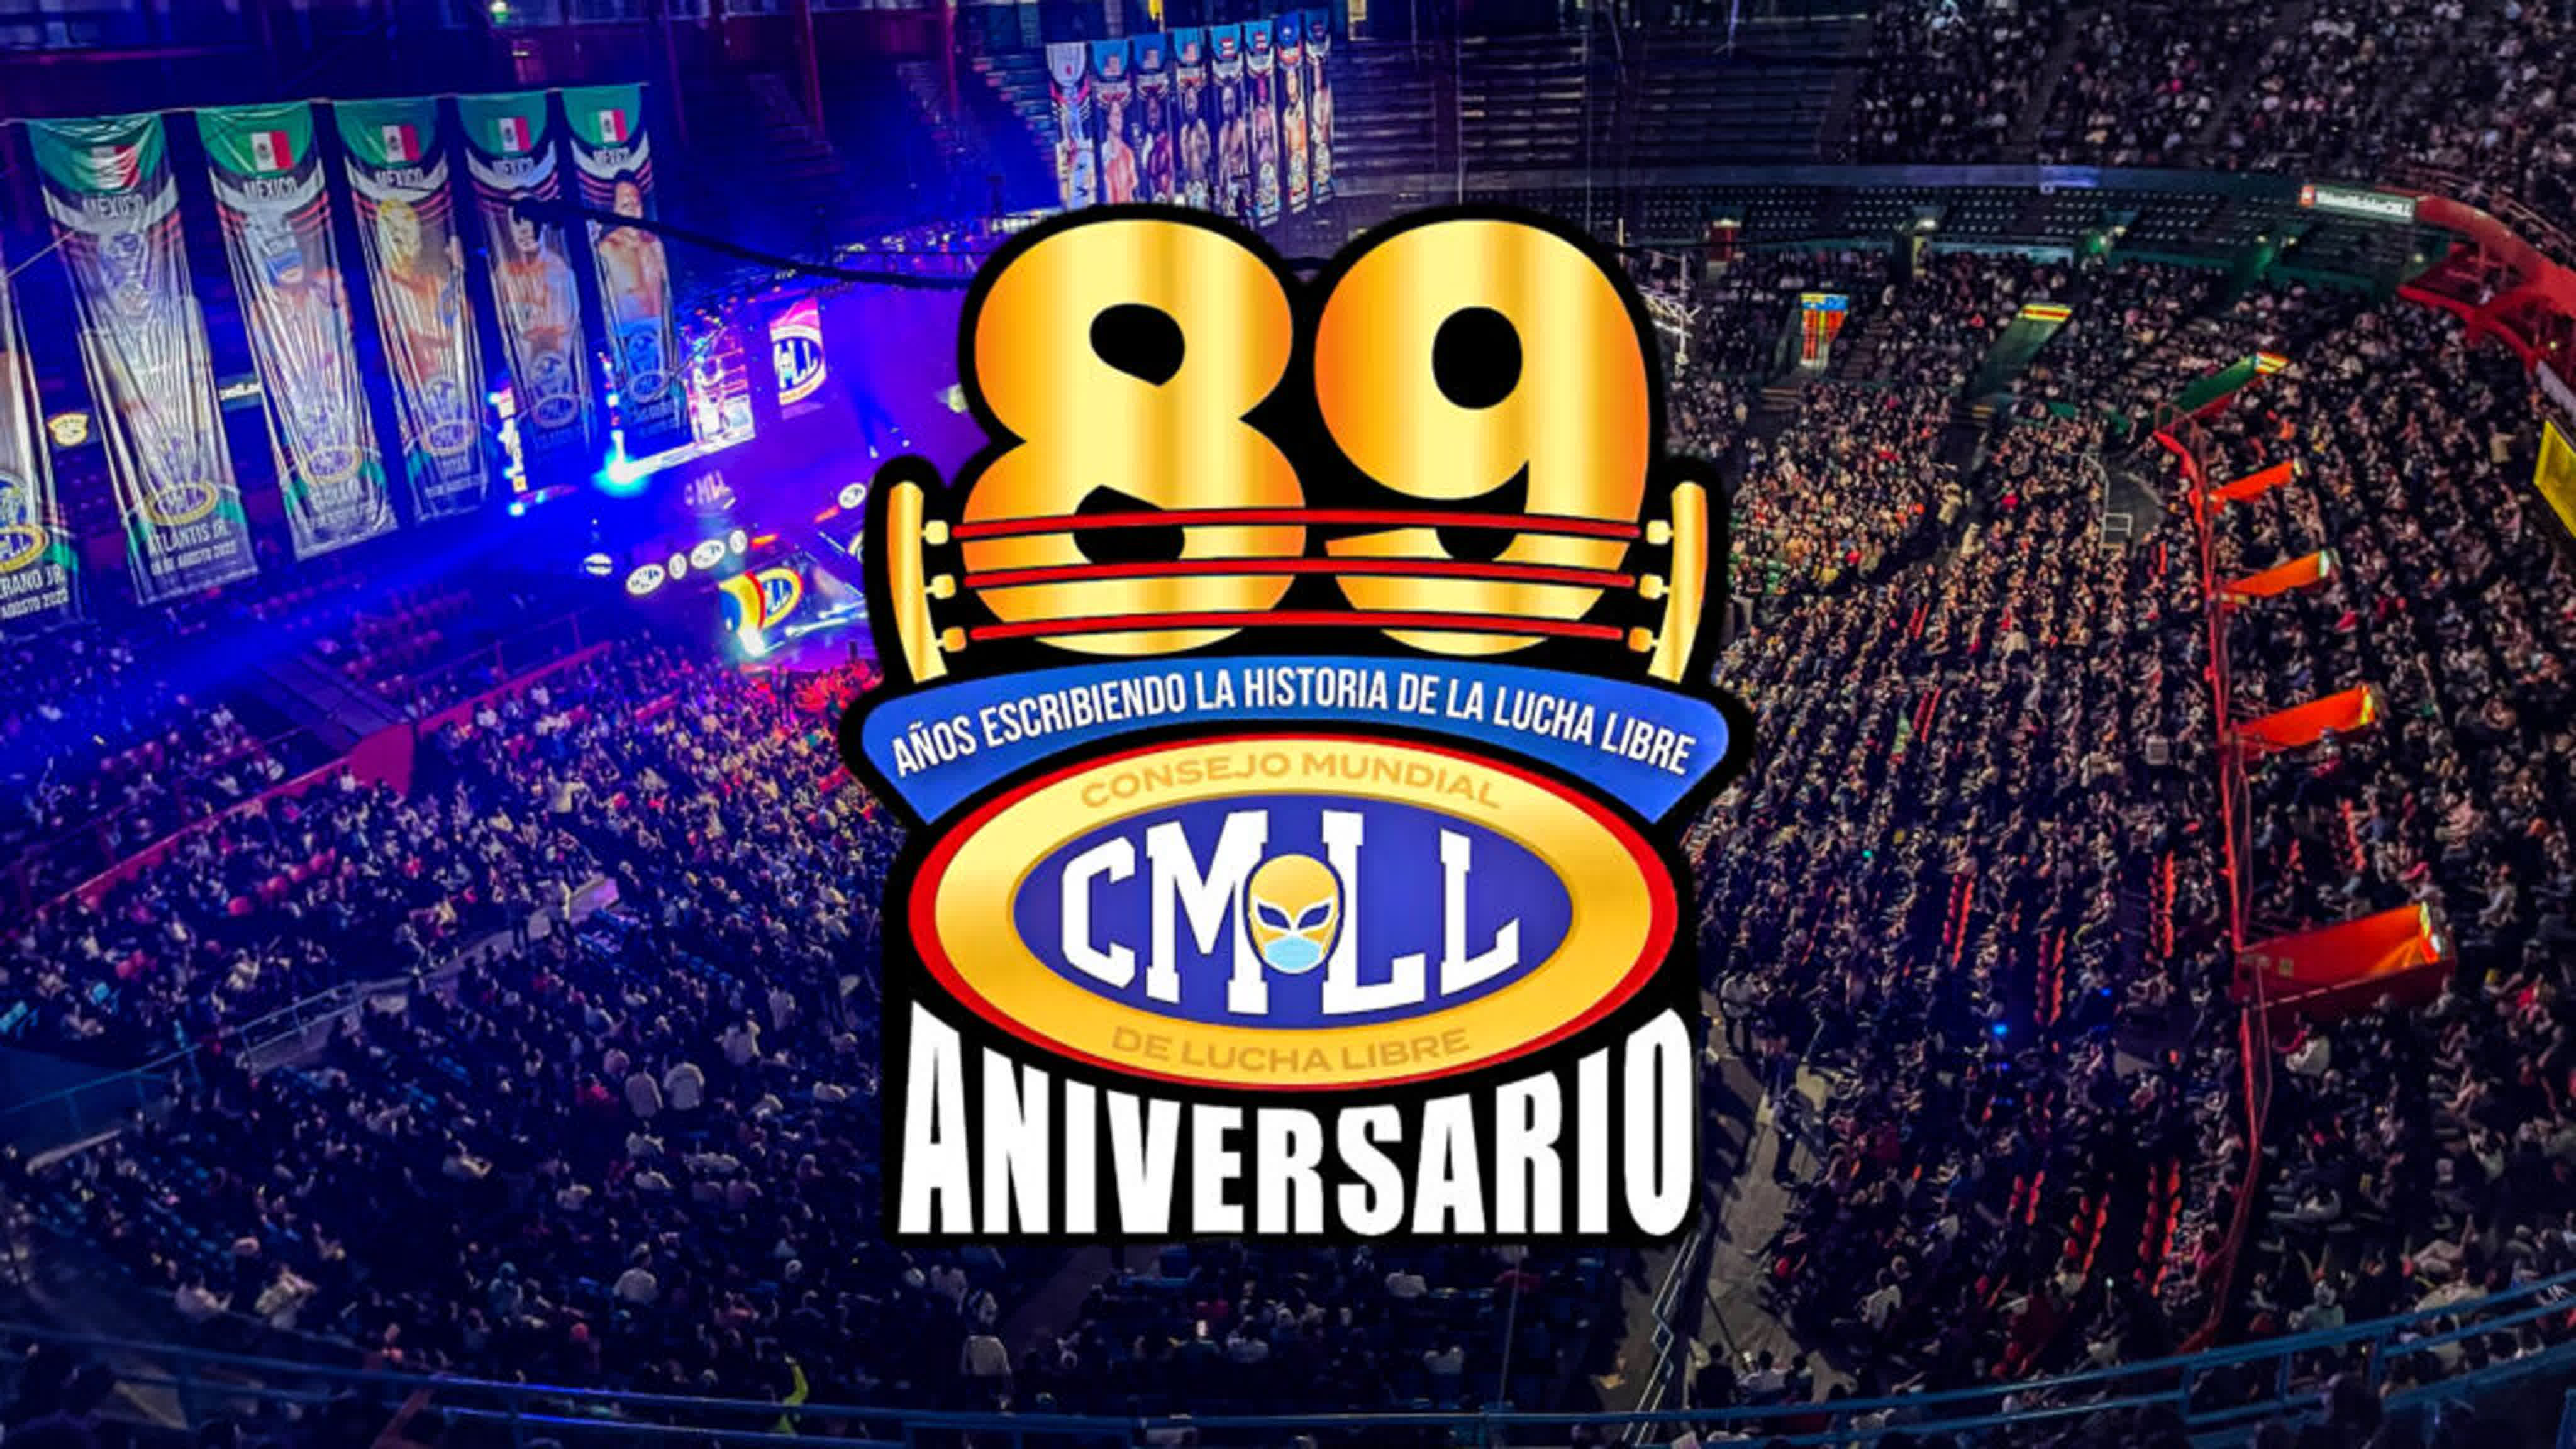 CMLL (Consejo Mundial De Lucha Libre)